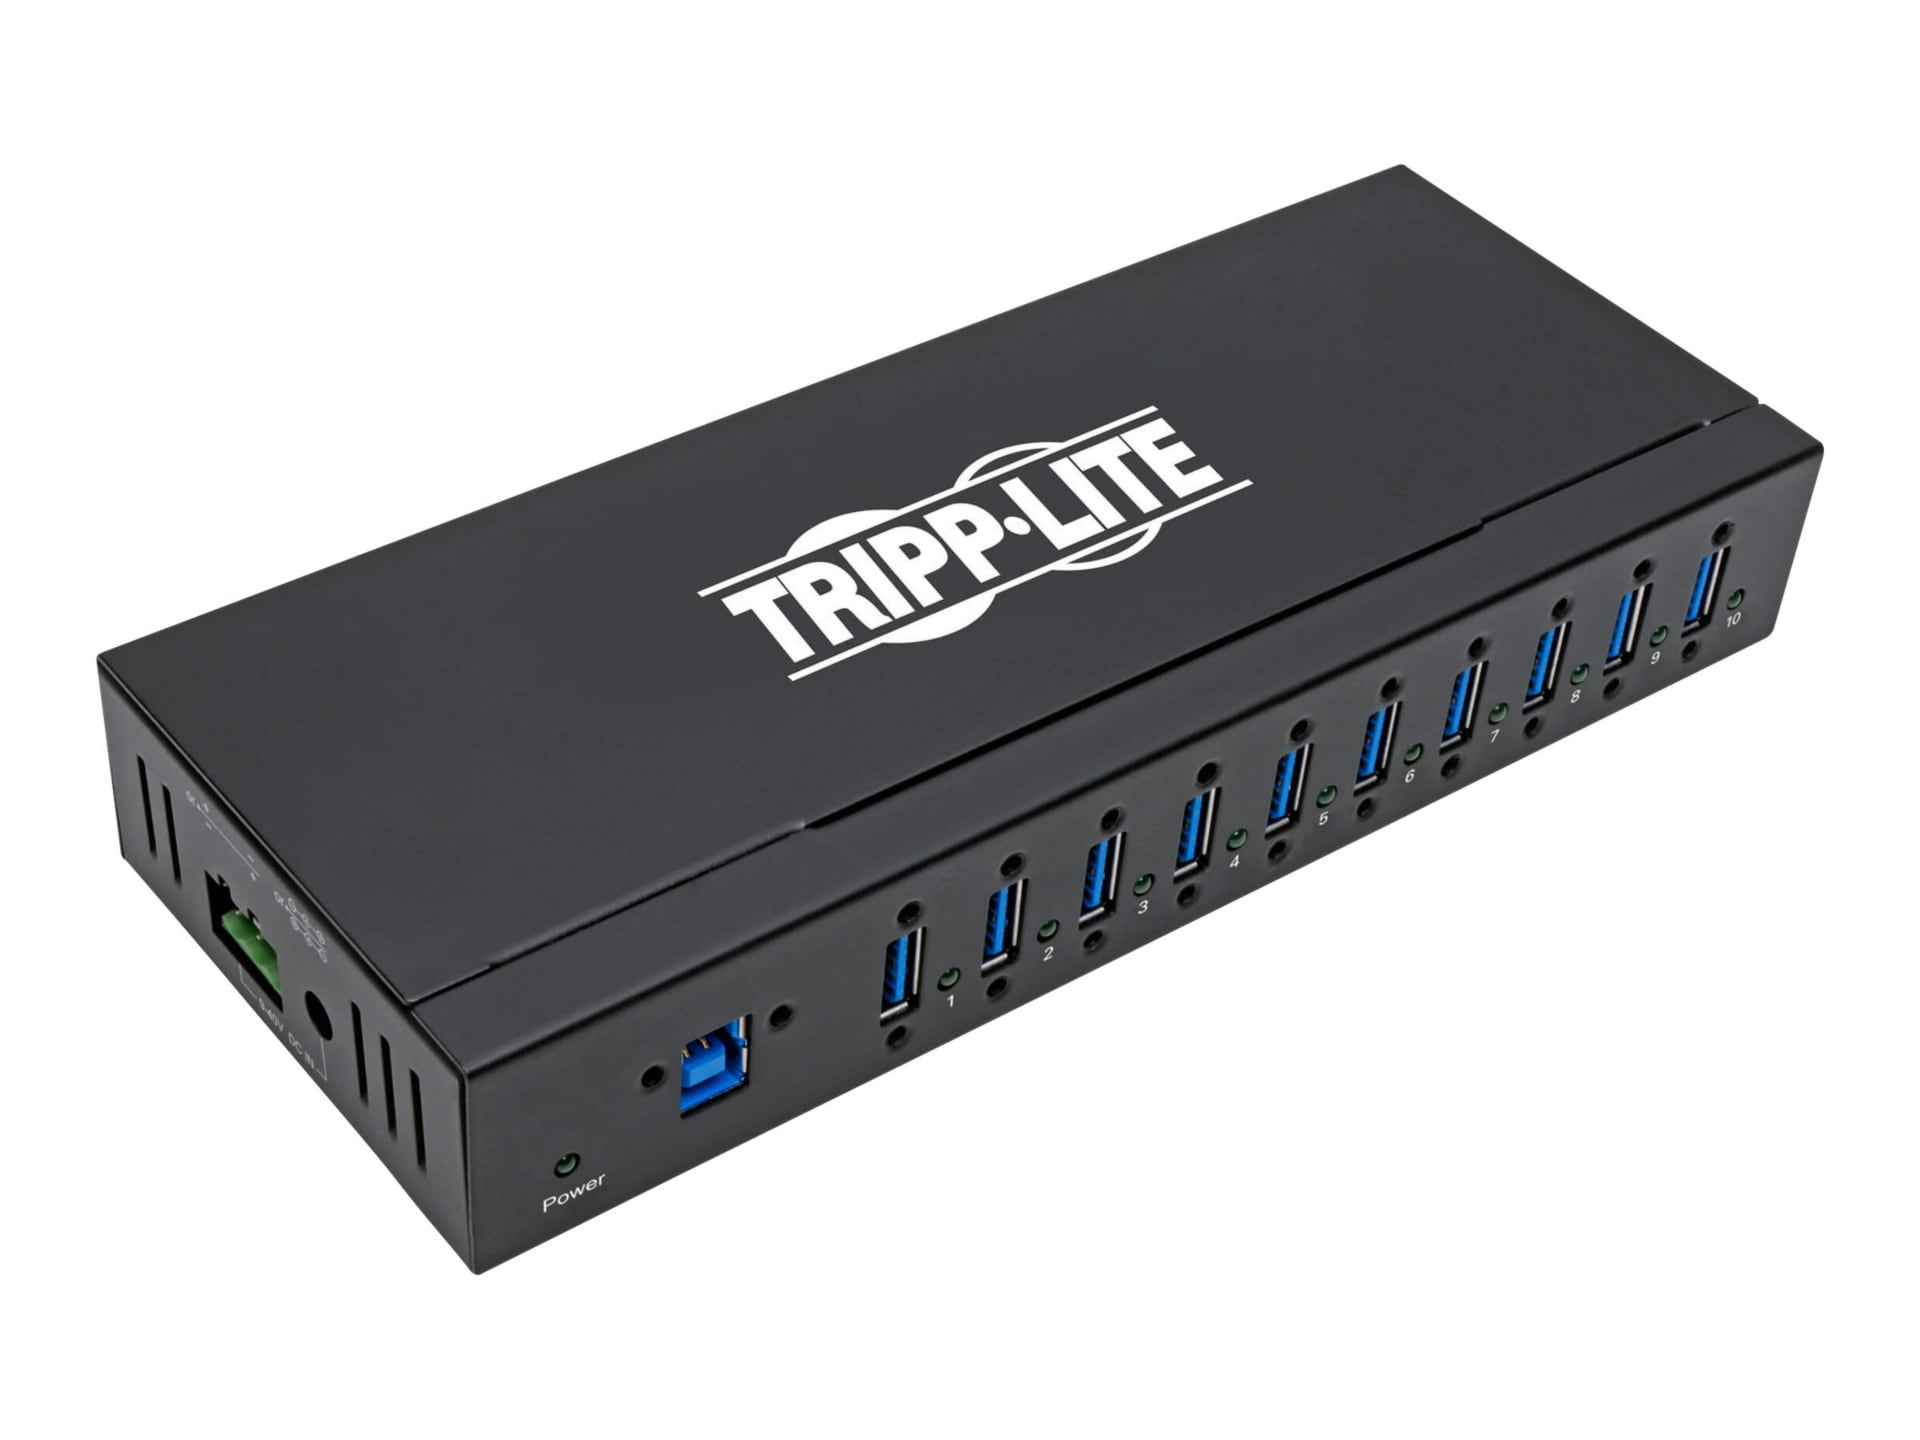 Eaton Tripp Lite series 10-Port Industrial-Grade USB 3.0 SuperSpeed Hub - 20 kV ESD Immunity, Iron Housing, Mountable -